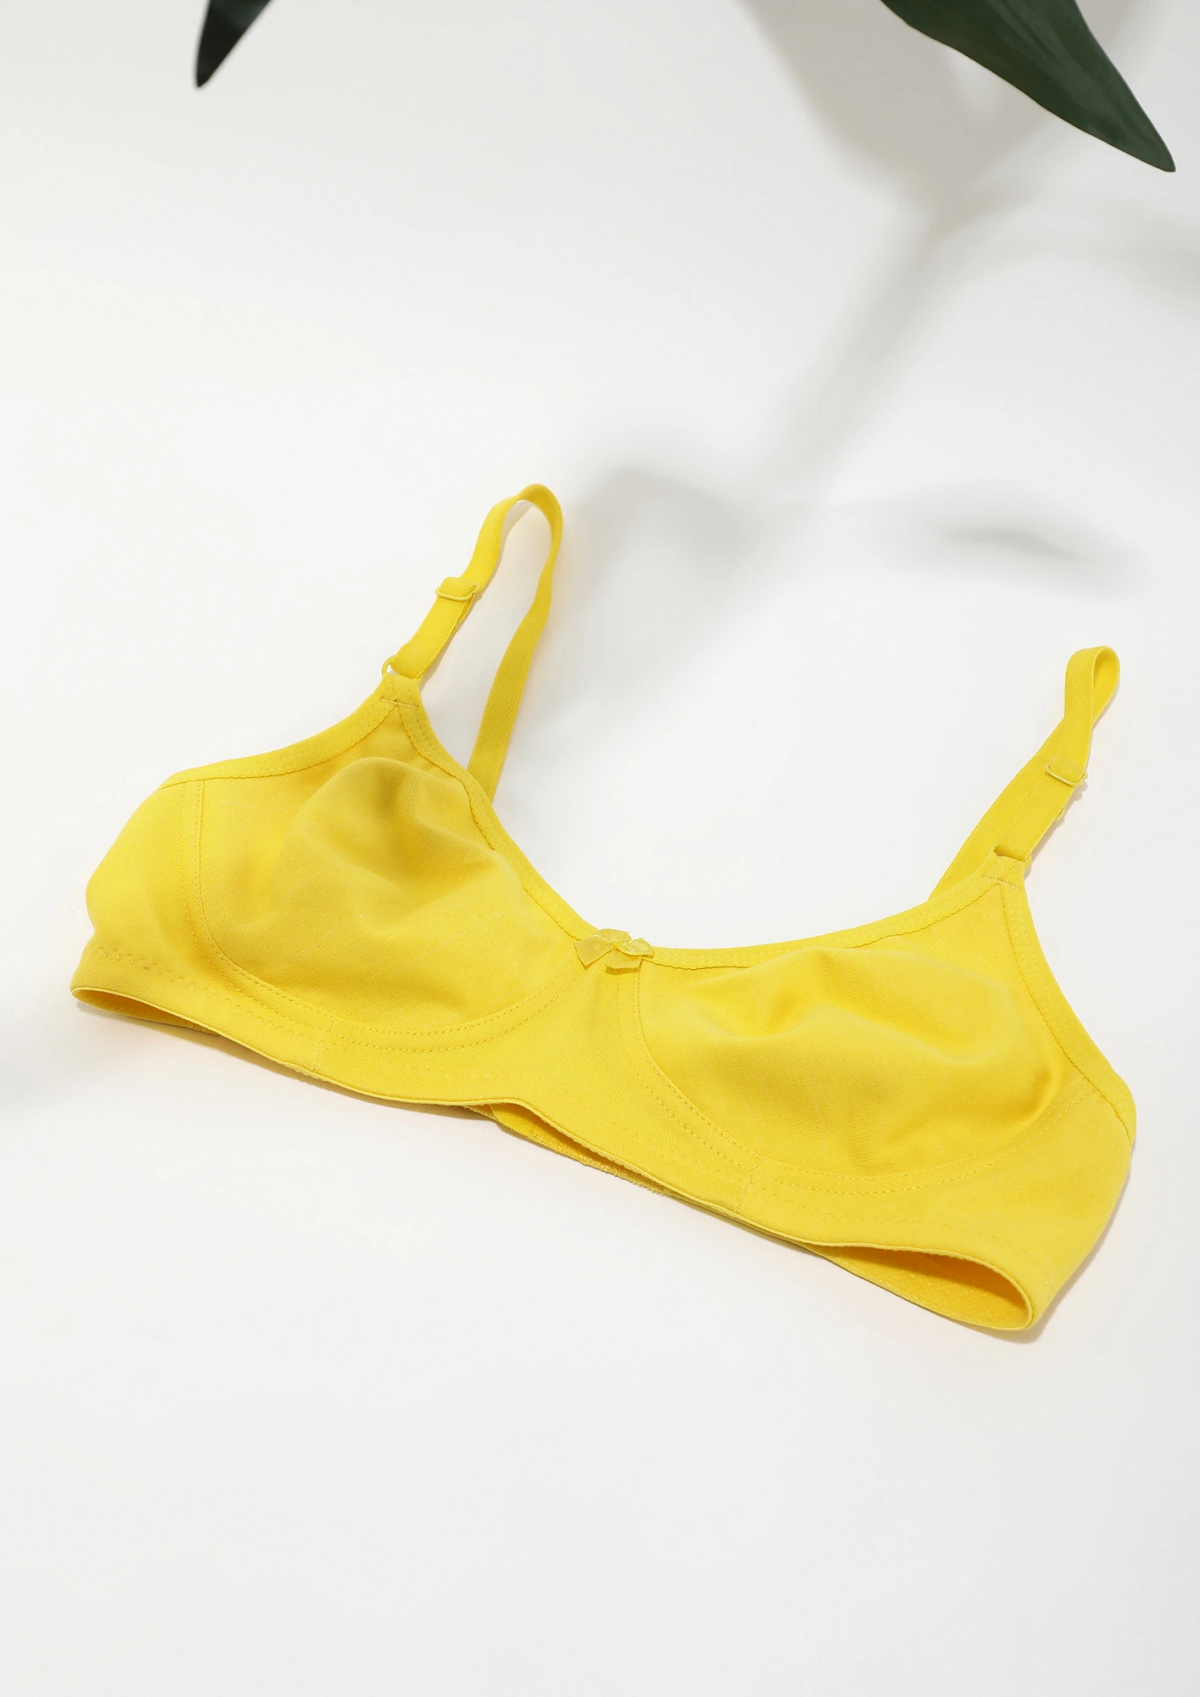 yellow bra on white background